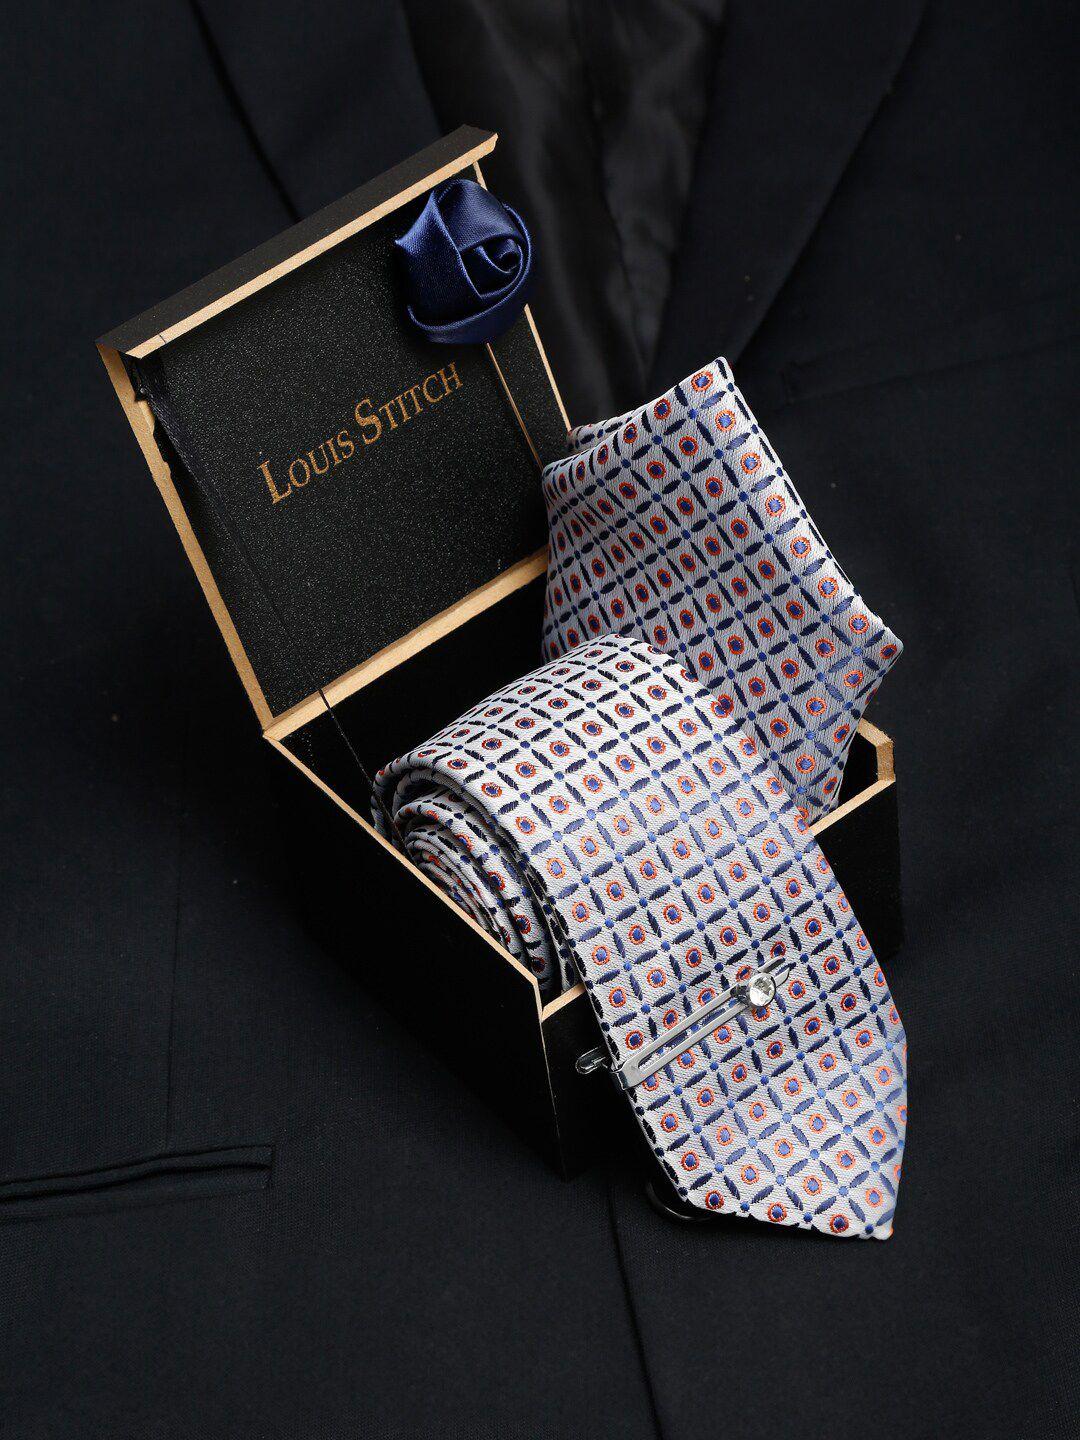 louis stitch men grey & blue woven design skinny tie